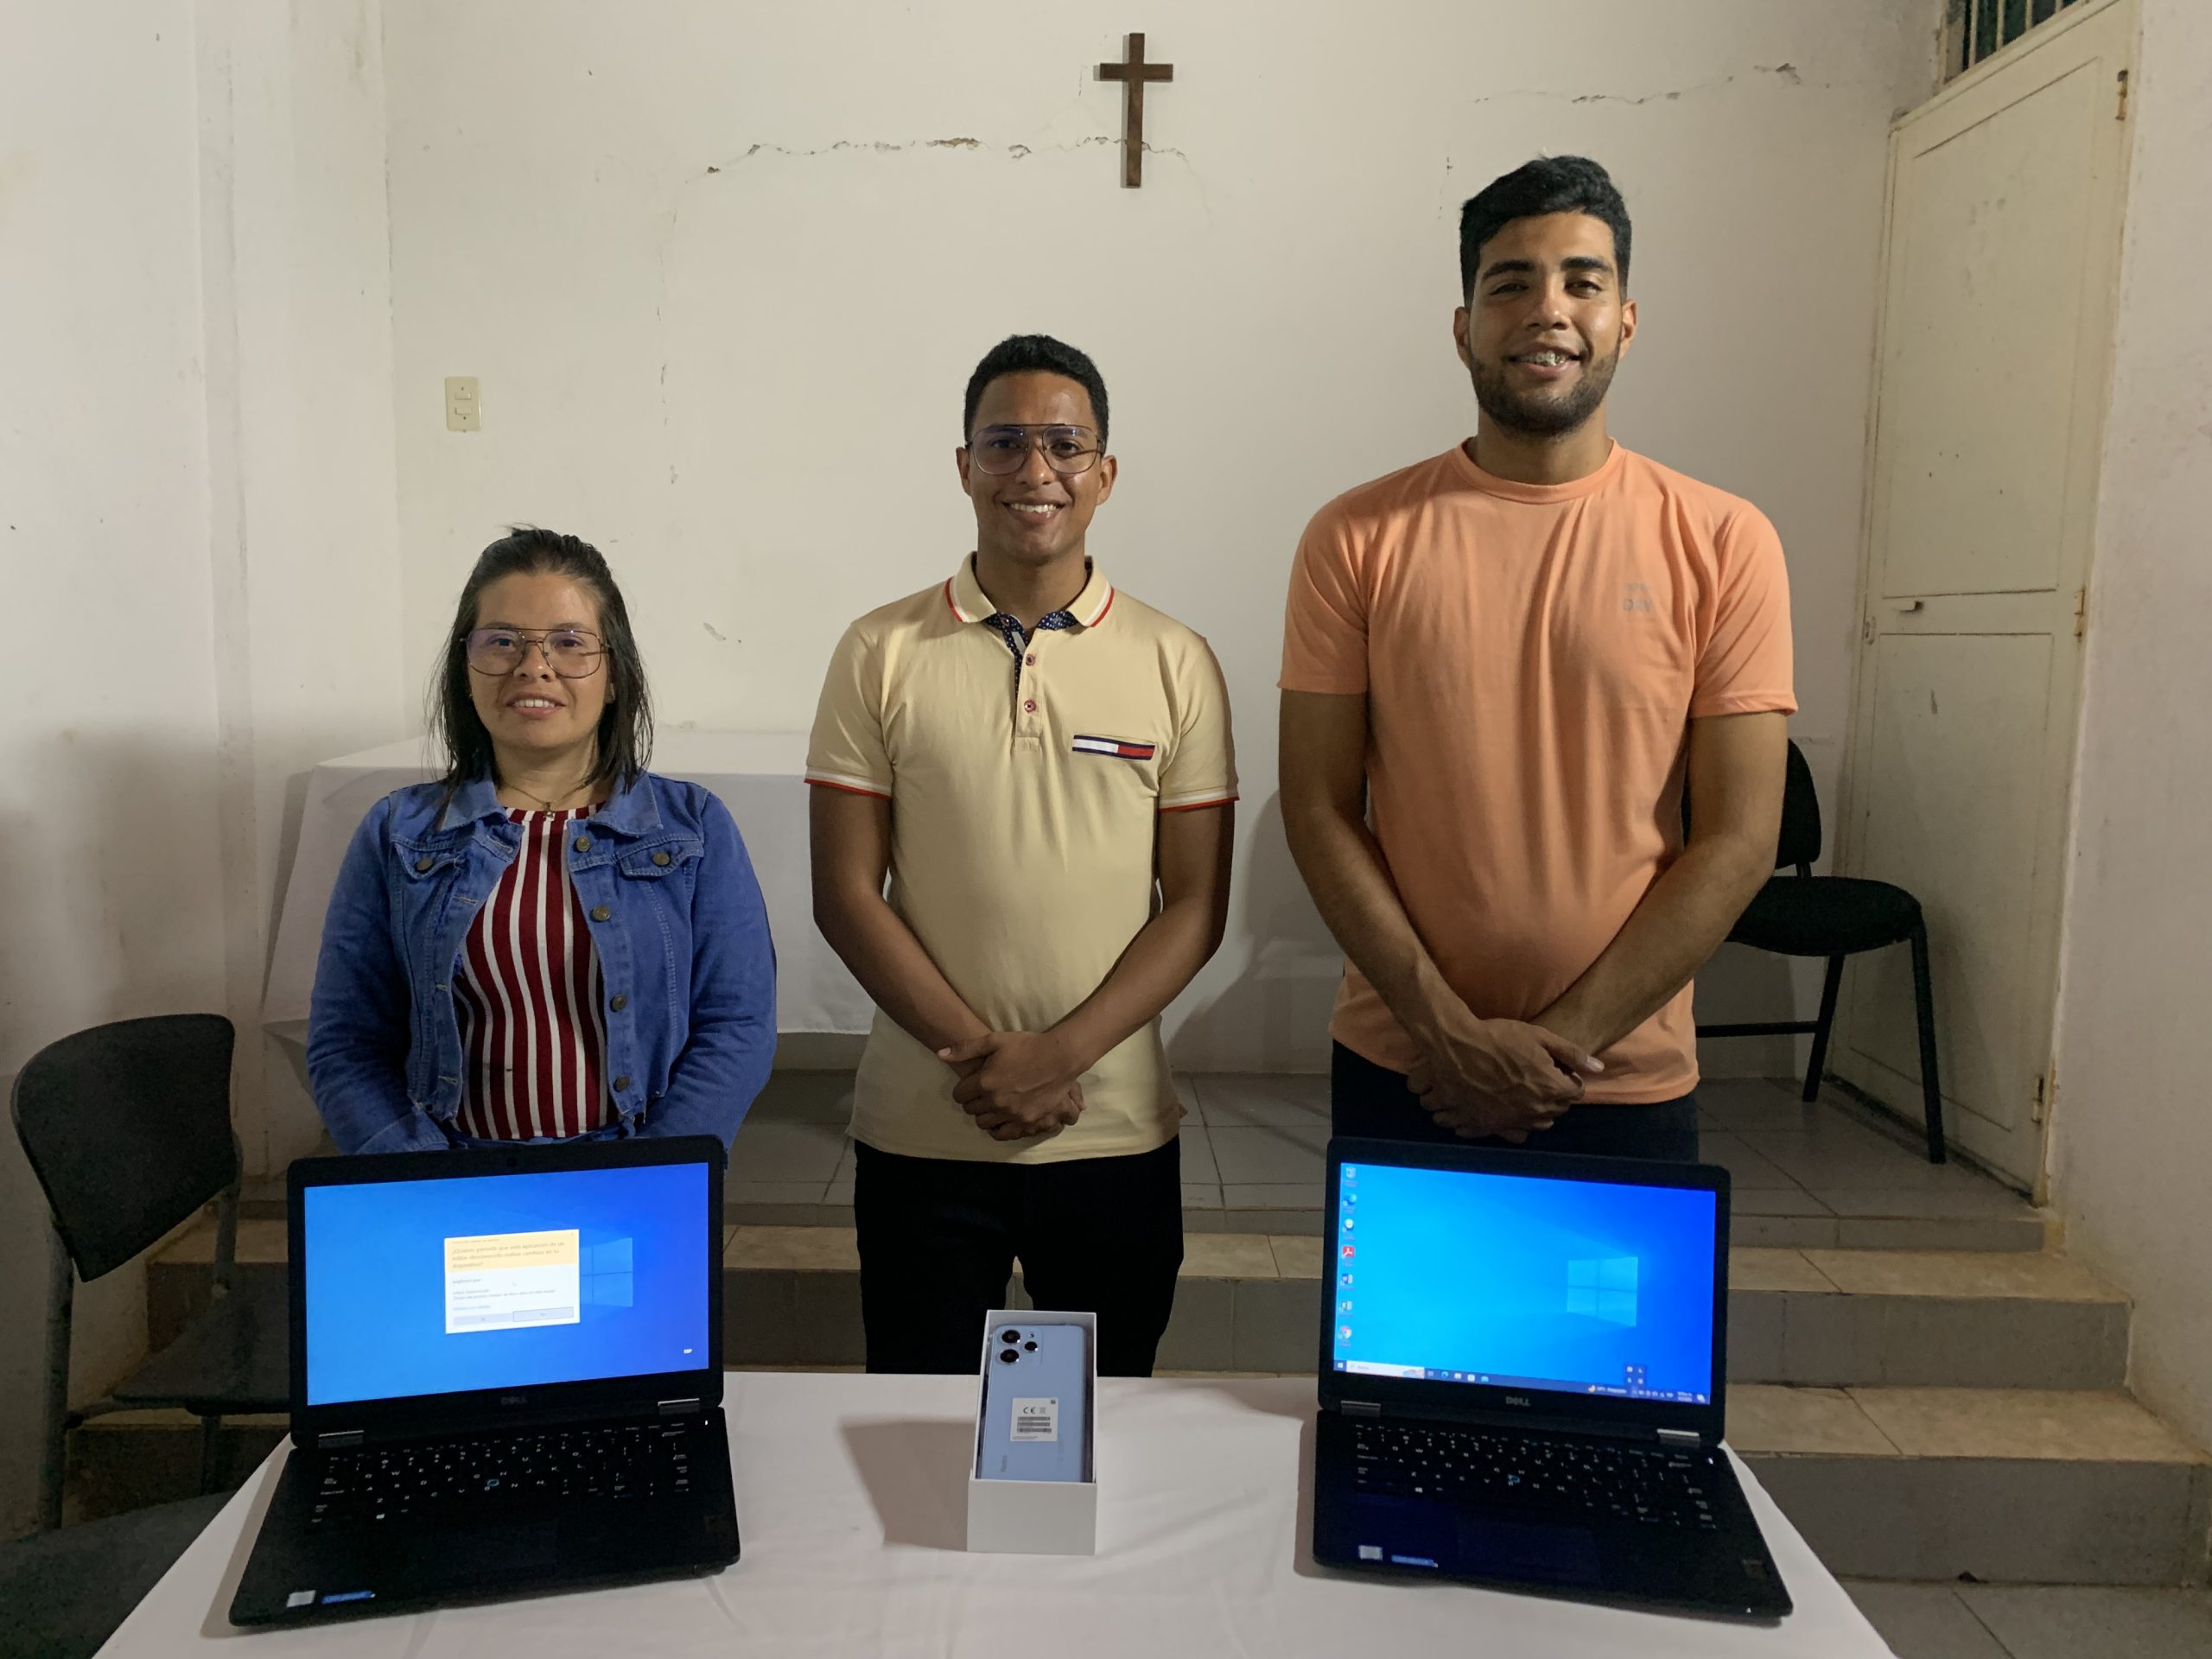 Youth leaders in Venezuela receive laptops, smartphone donation